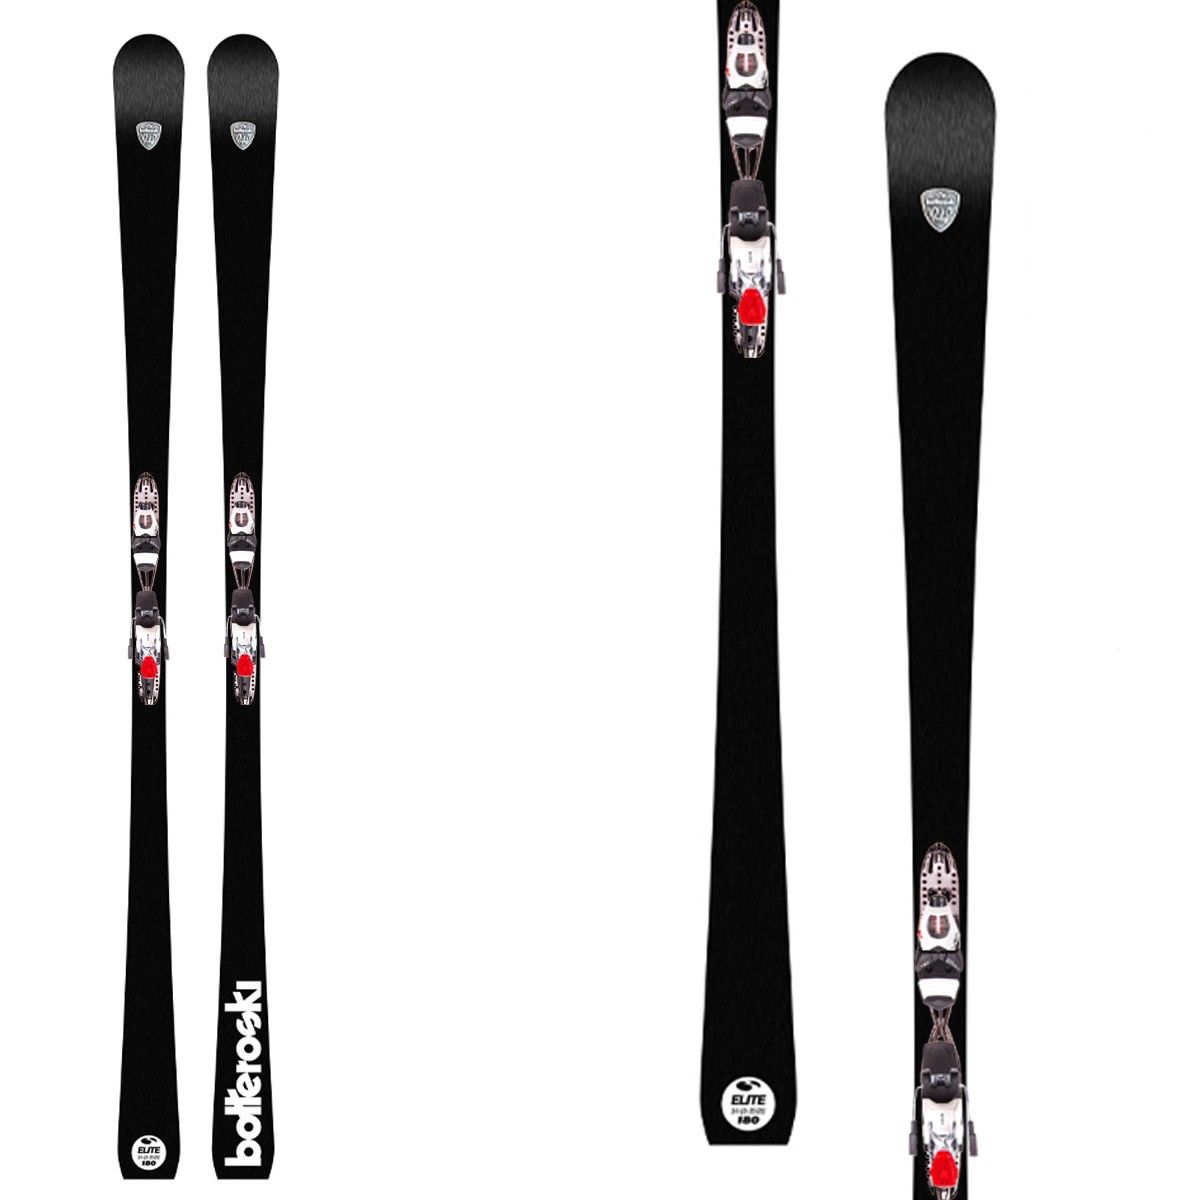  Sci Bottero Ski Elite + Speed com +Vsp412 (Colore: nero-bianco, Taglia: 180) 